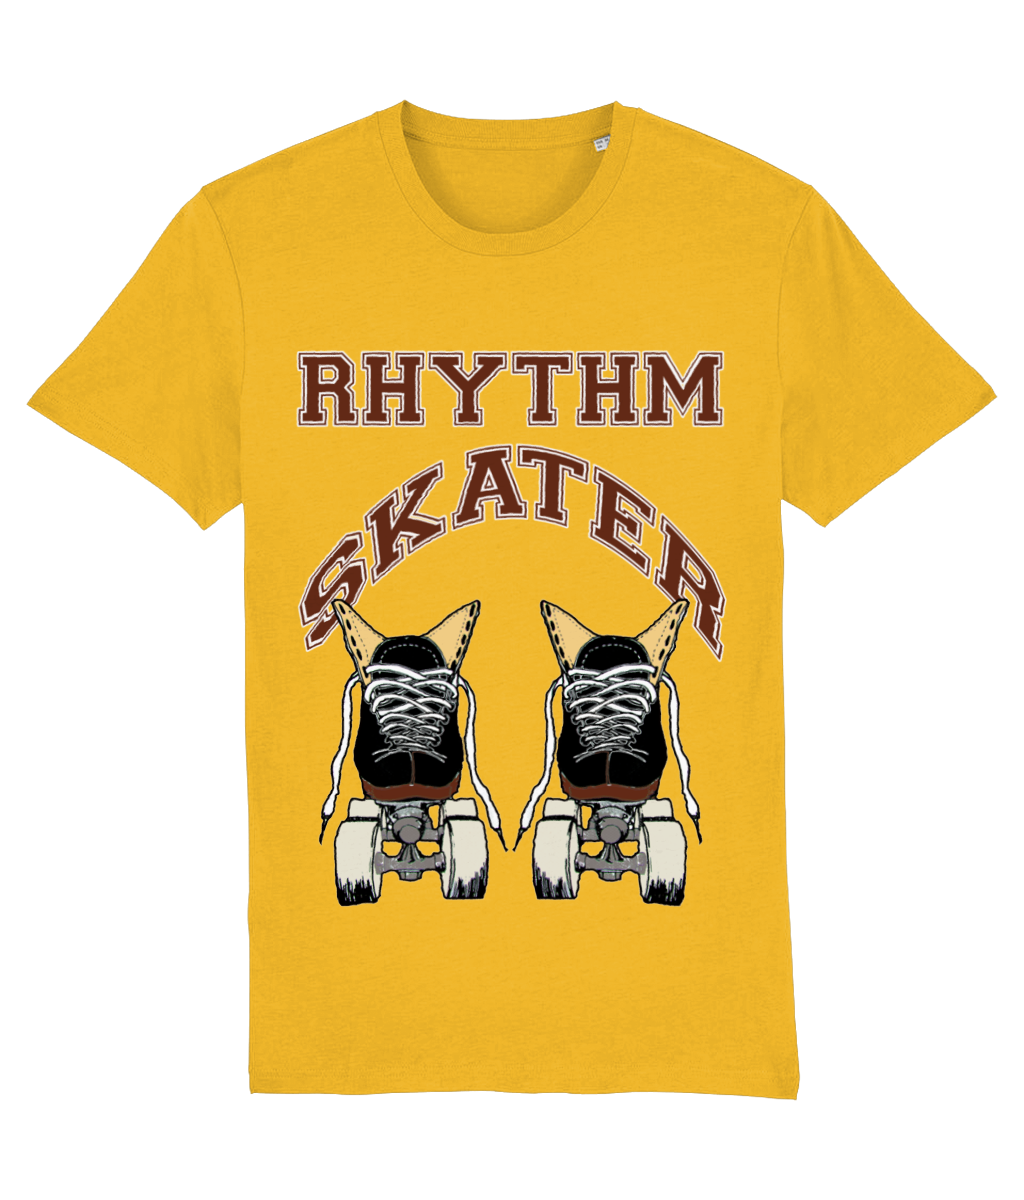 Tshirt Rhythm Skater classic